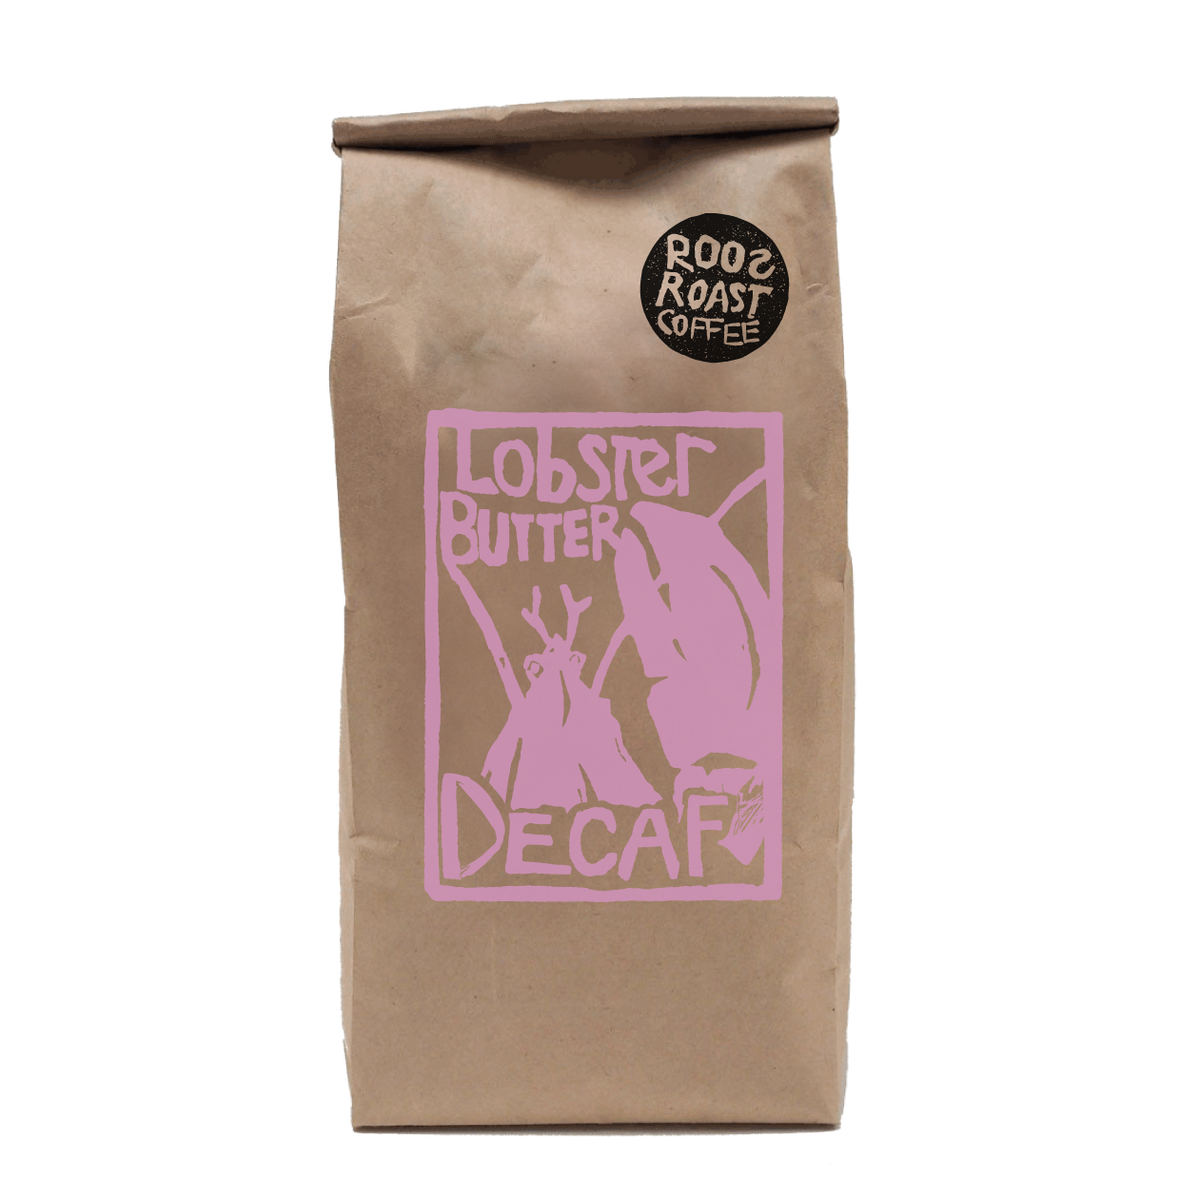 Organic, Fair Trade Lobster Butter Love Decaf Coffee. RoosRoast Coffee in Ann Arbor, Michigan